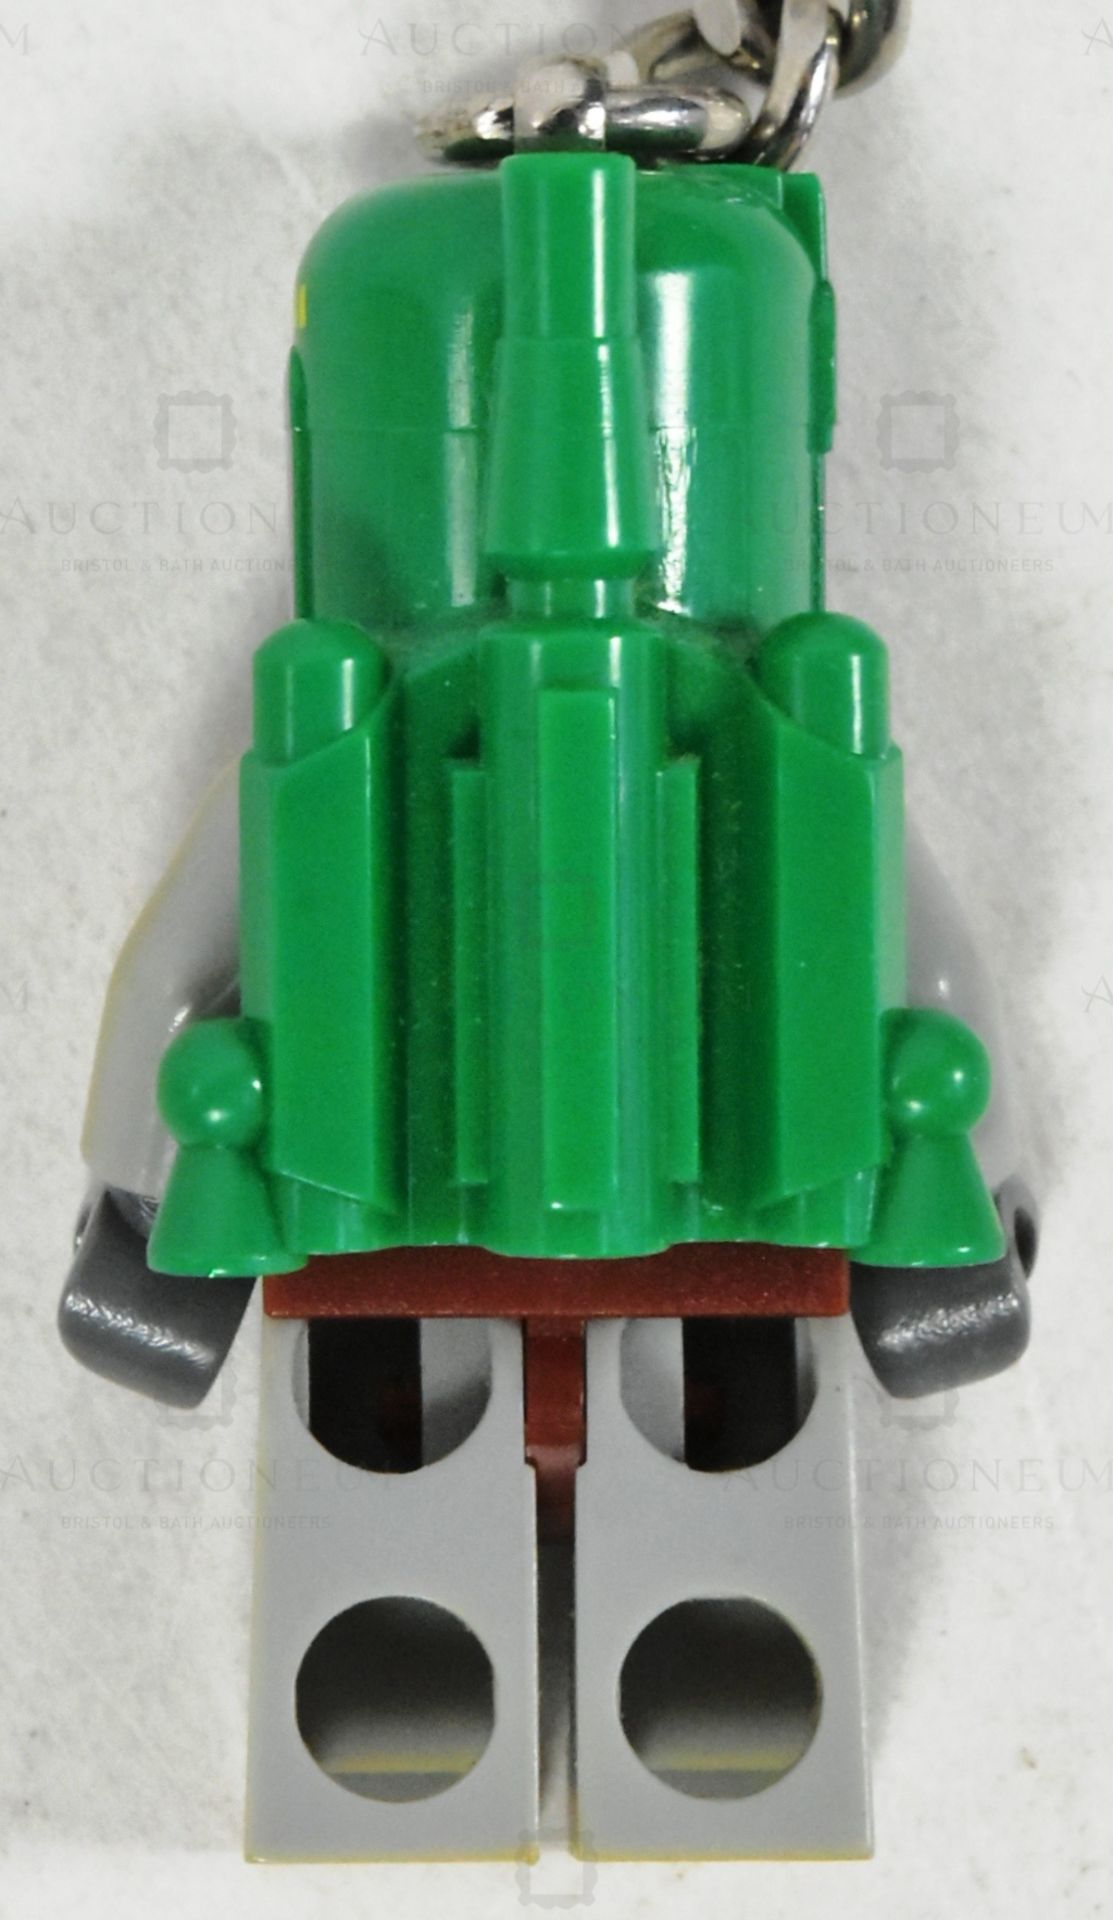 ESTATE OF JEREMY BULLOCH - STAR WARS - LEGO BOBA FETT KEYRING - Image 3 of 4